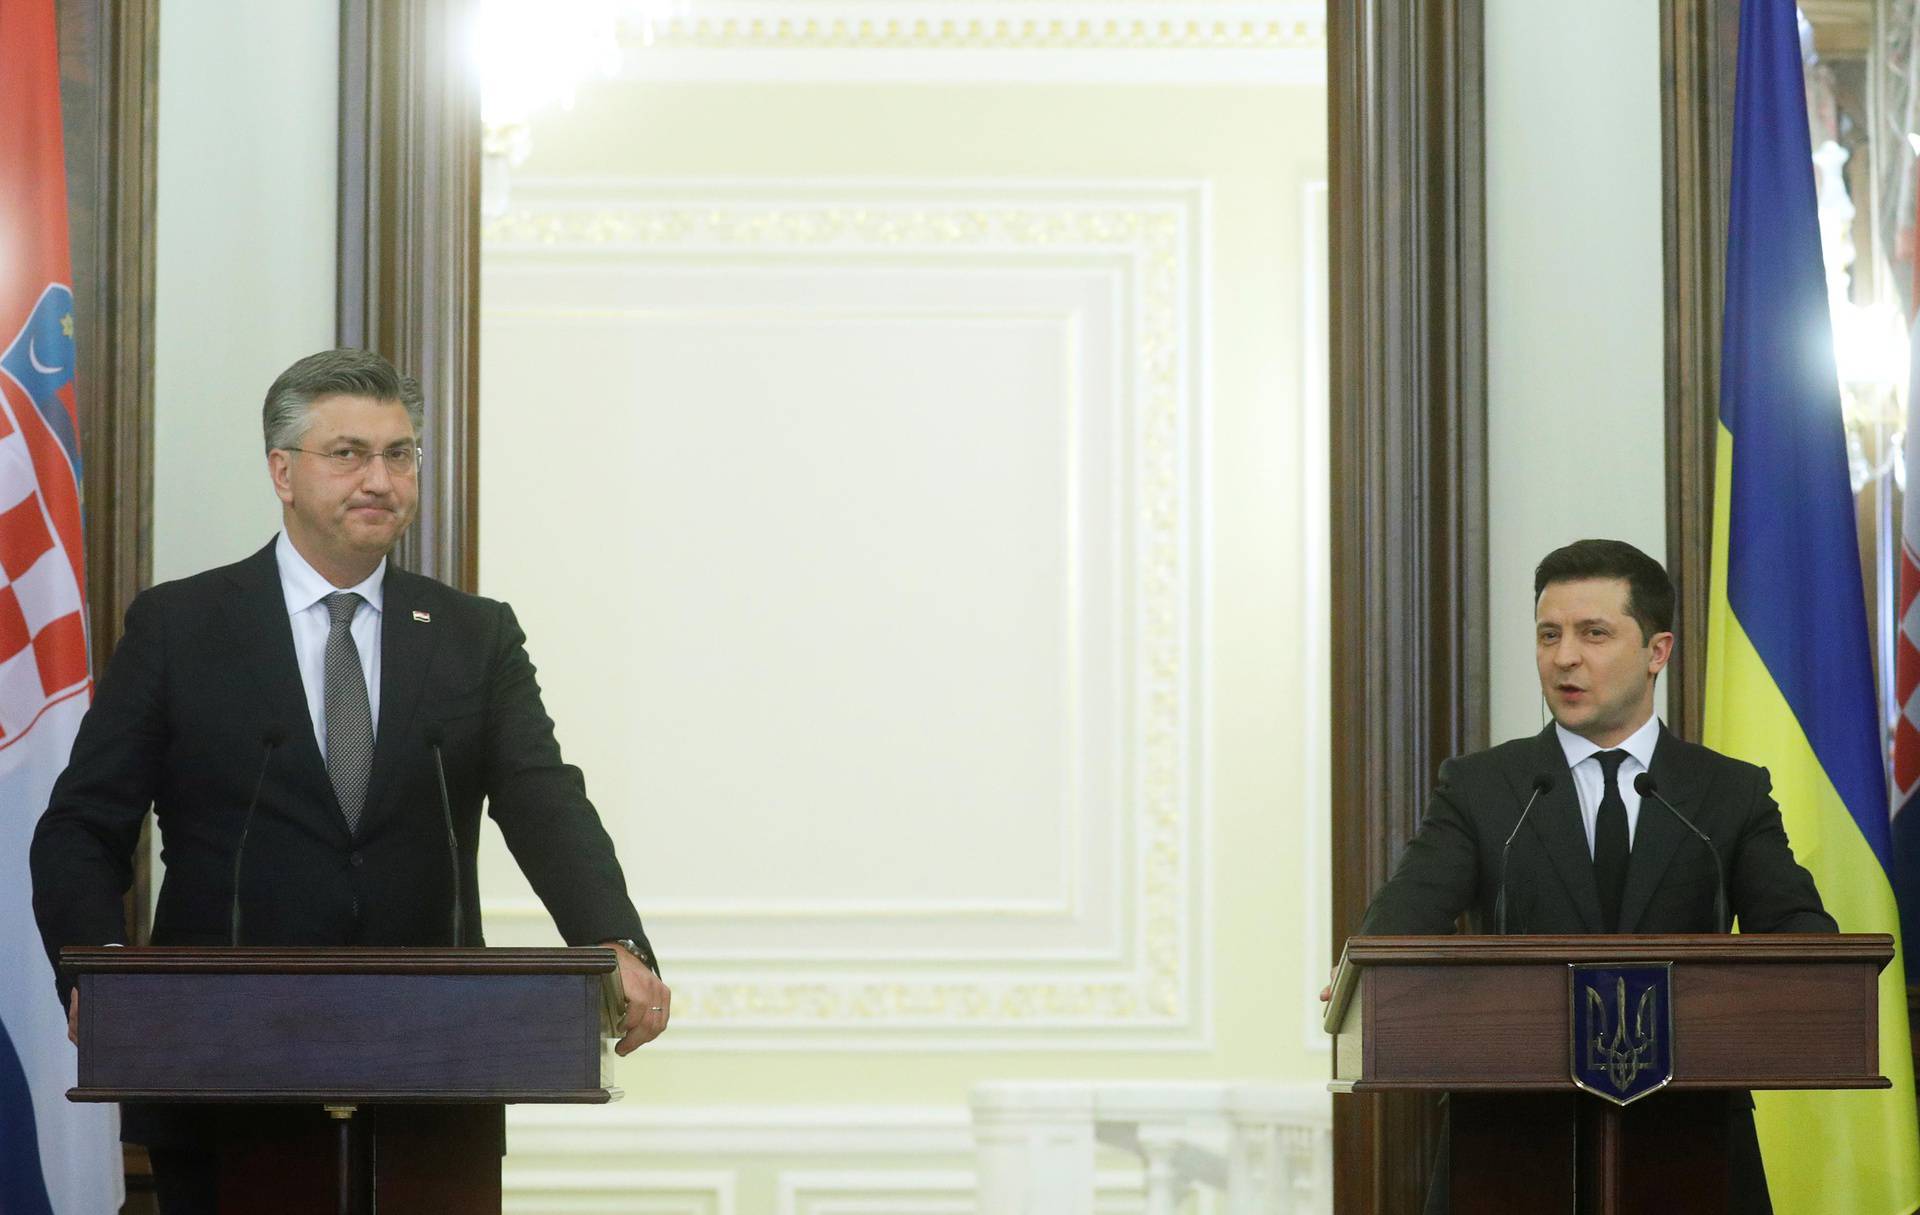 Ukrainian President Volodymyr Zelenskiy and Croatian Prime Minister Andrej Plenkovic deliver a joint statement in Kyiv